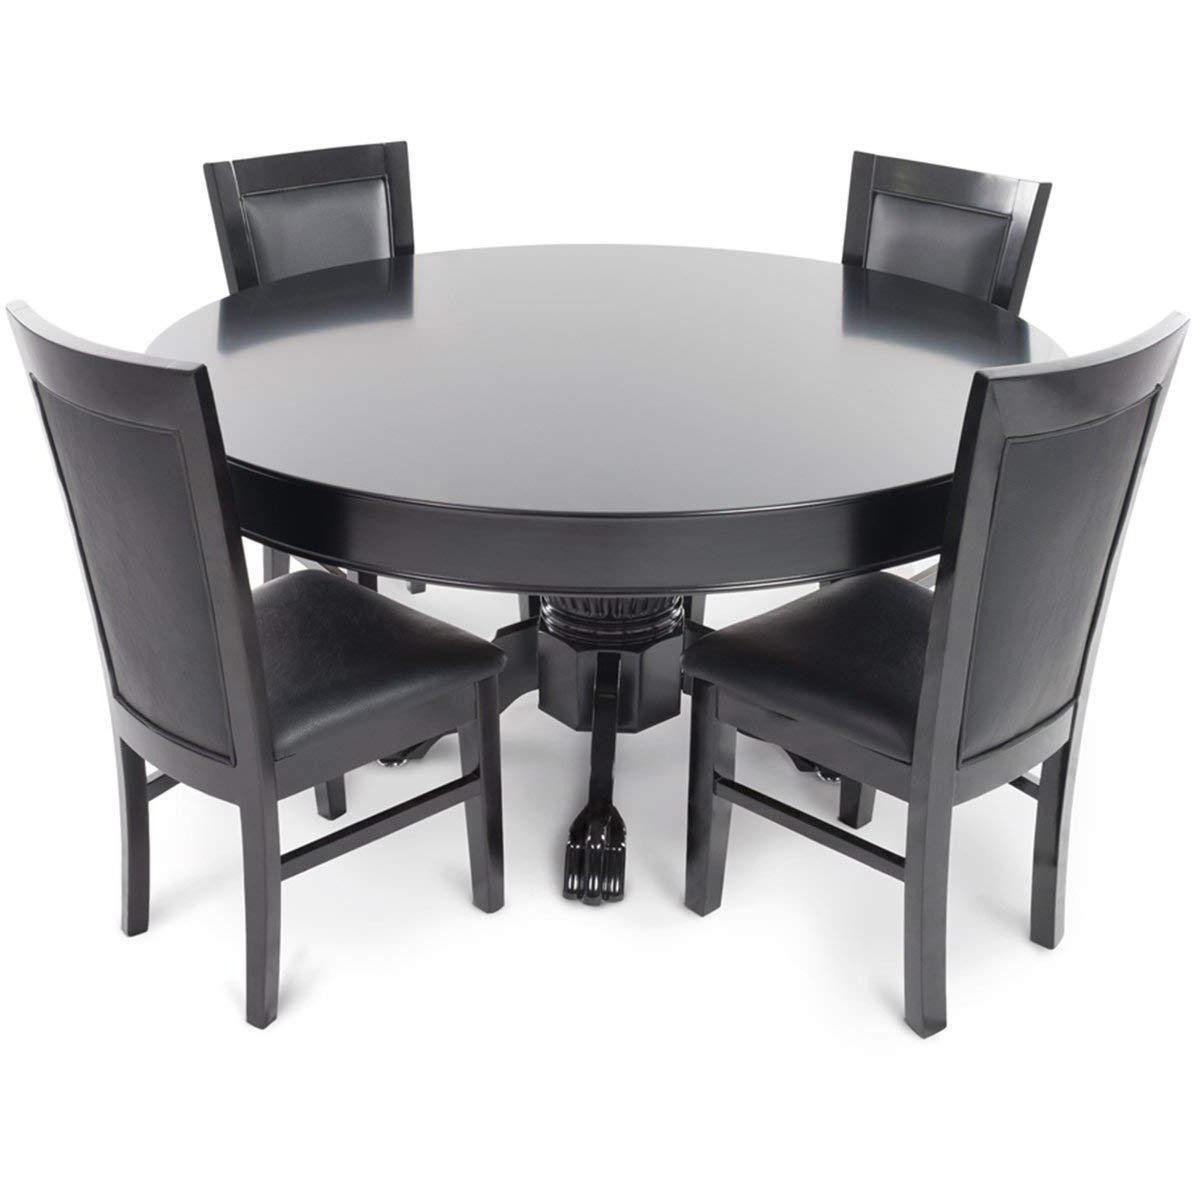 BBO Poker Tables Black Gloss Classic Poker Dining Chair Set - Just Poker Tables